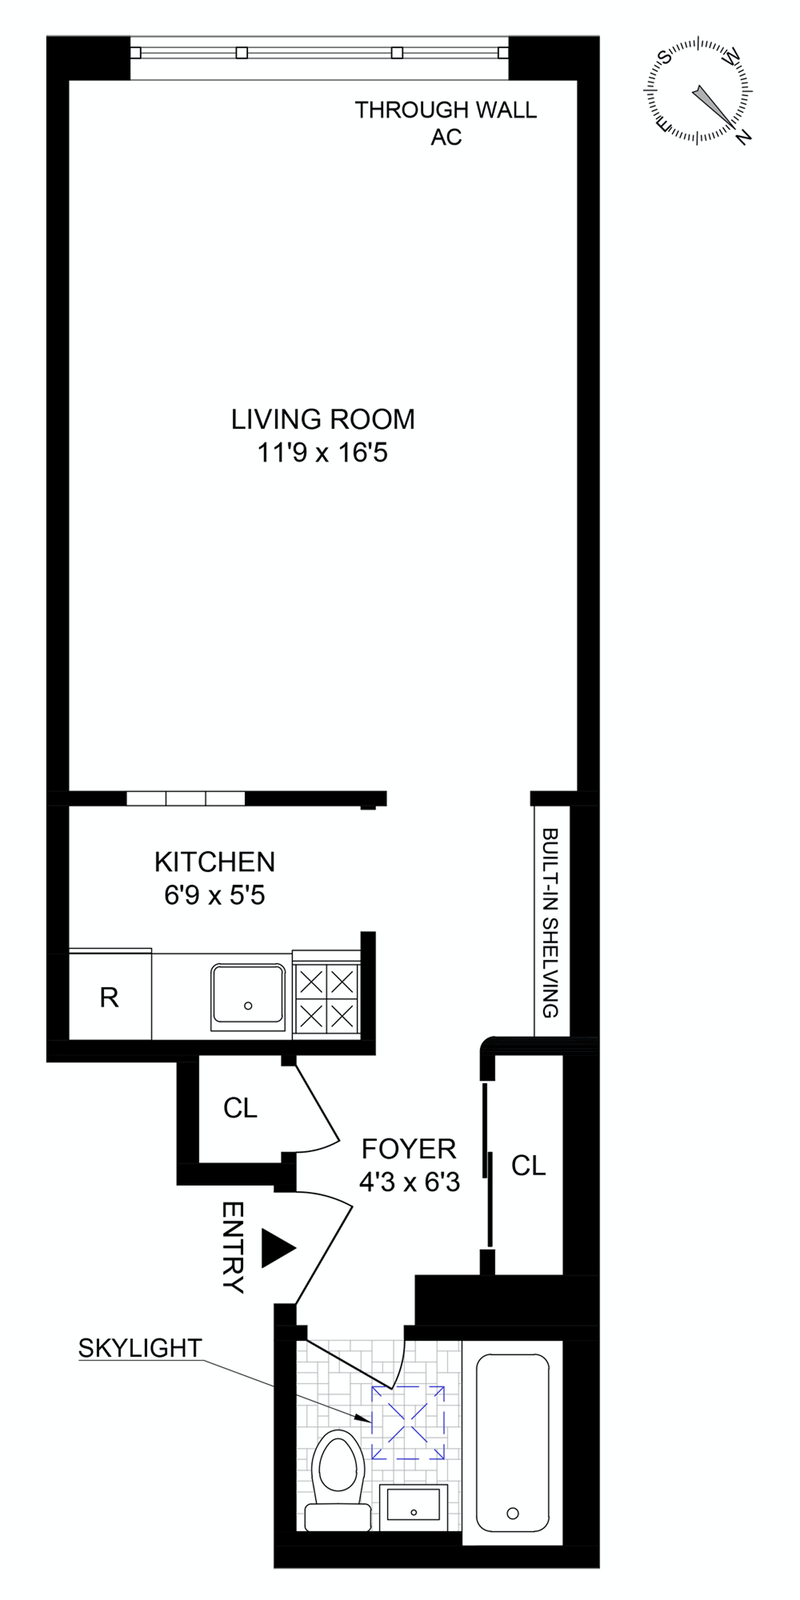 Floorplan for 321 East 71st Street, 5H